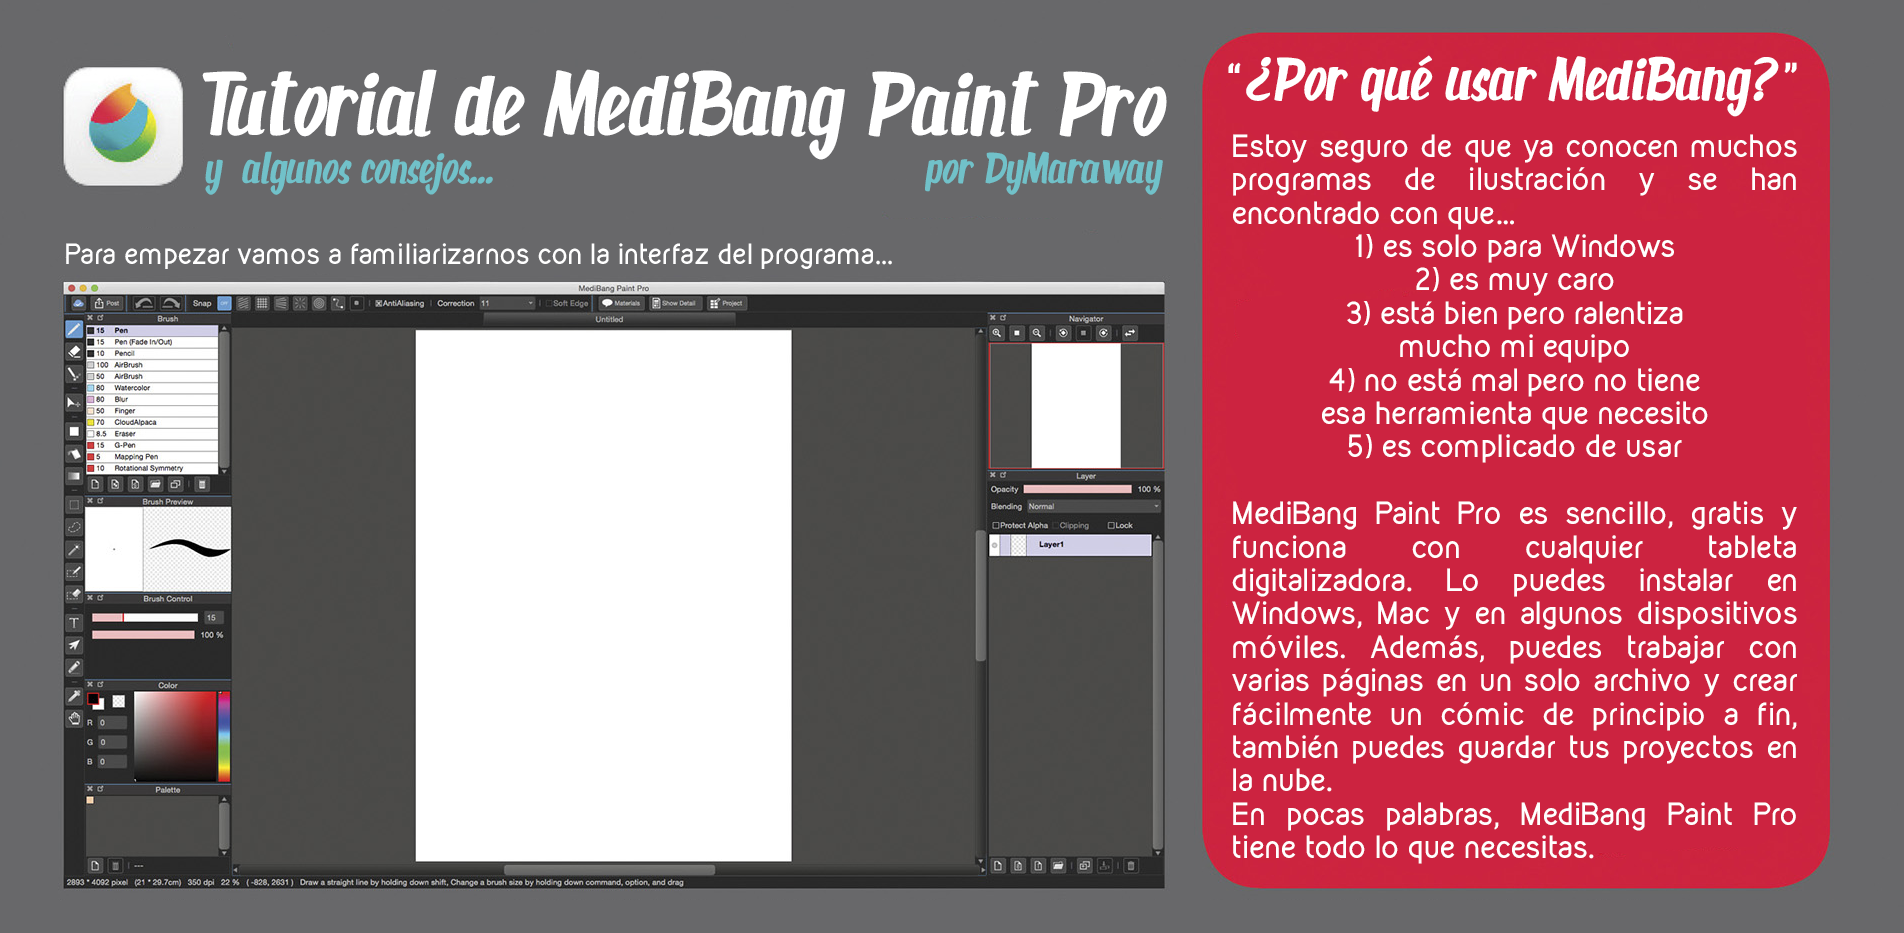 medibang paint pro tutorial